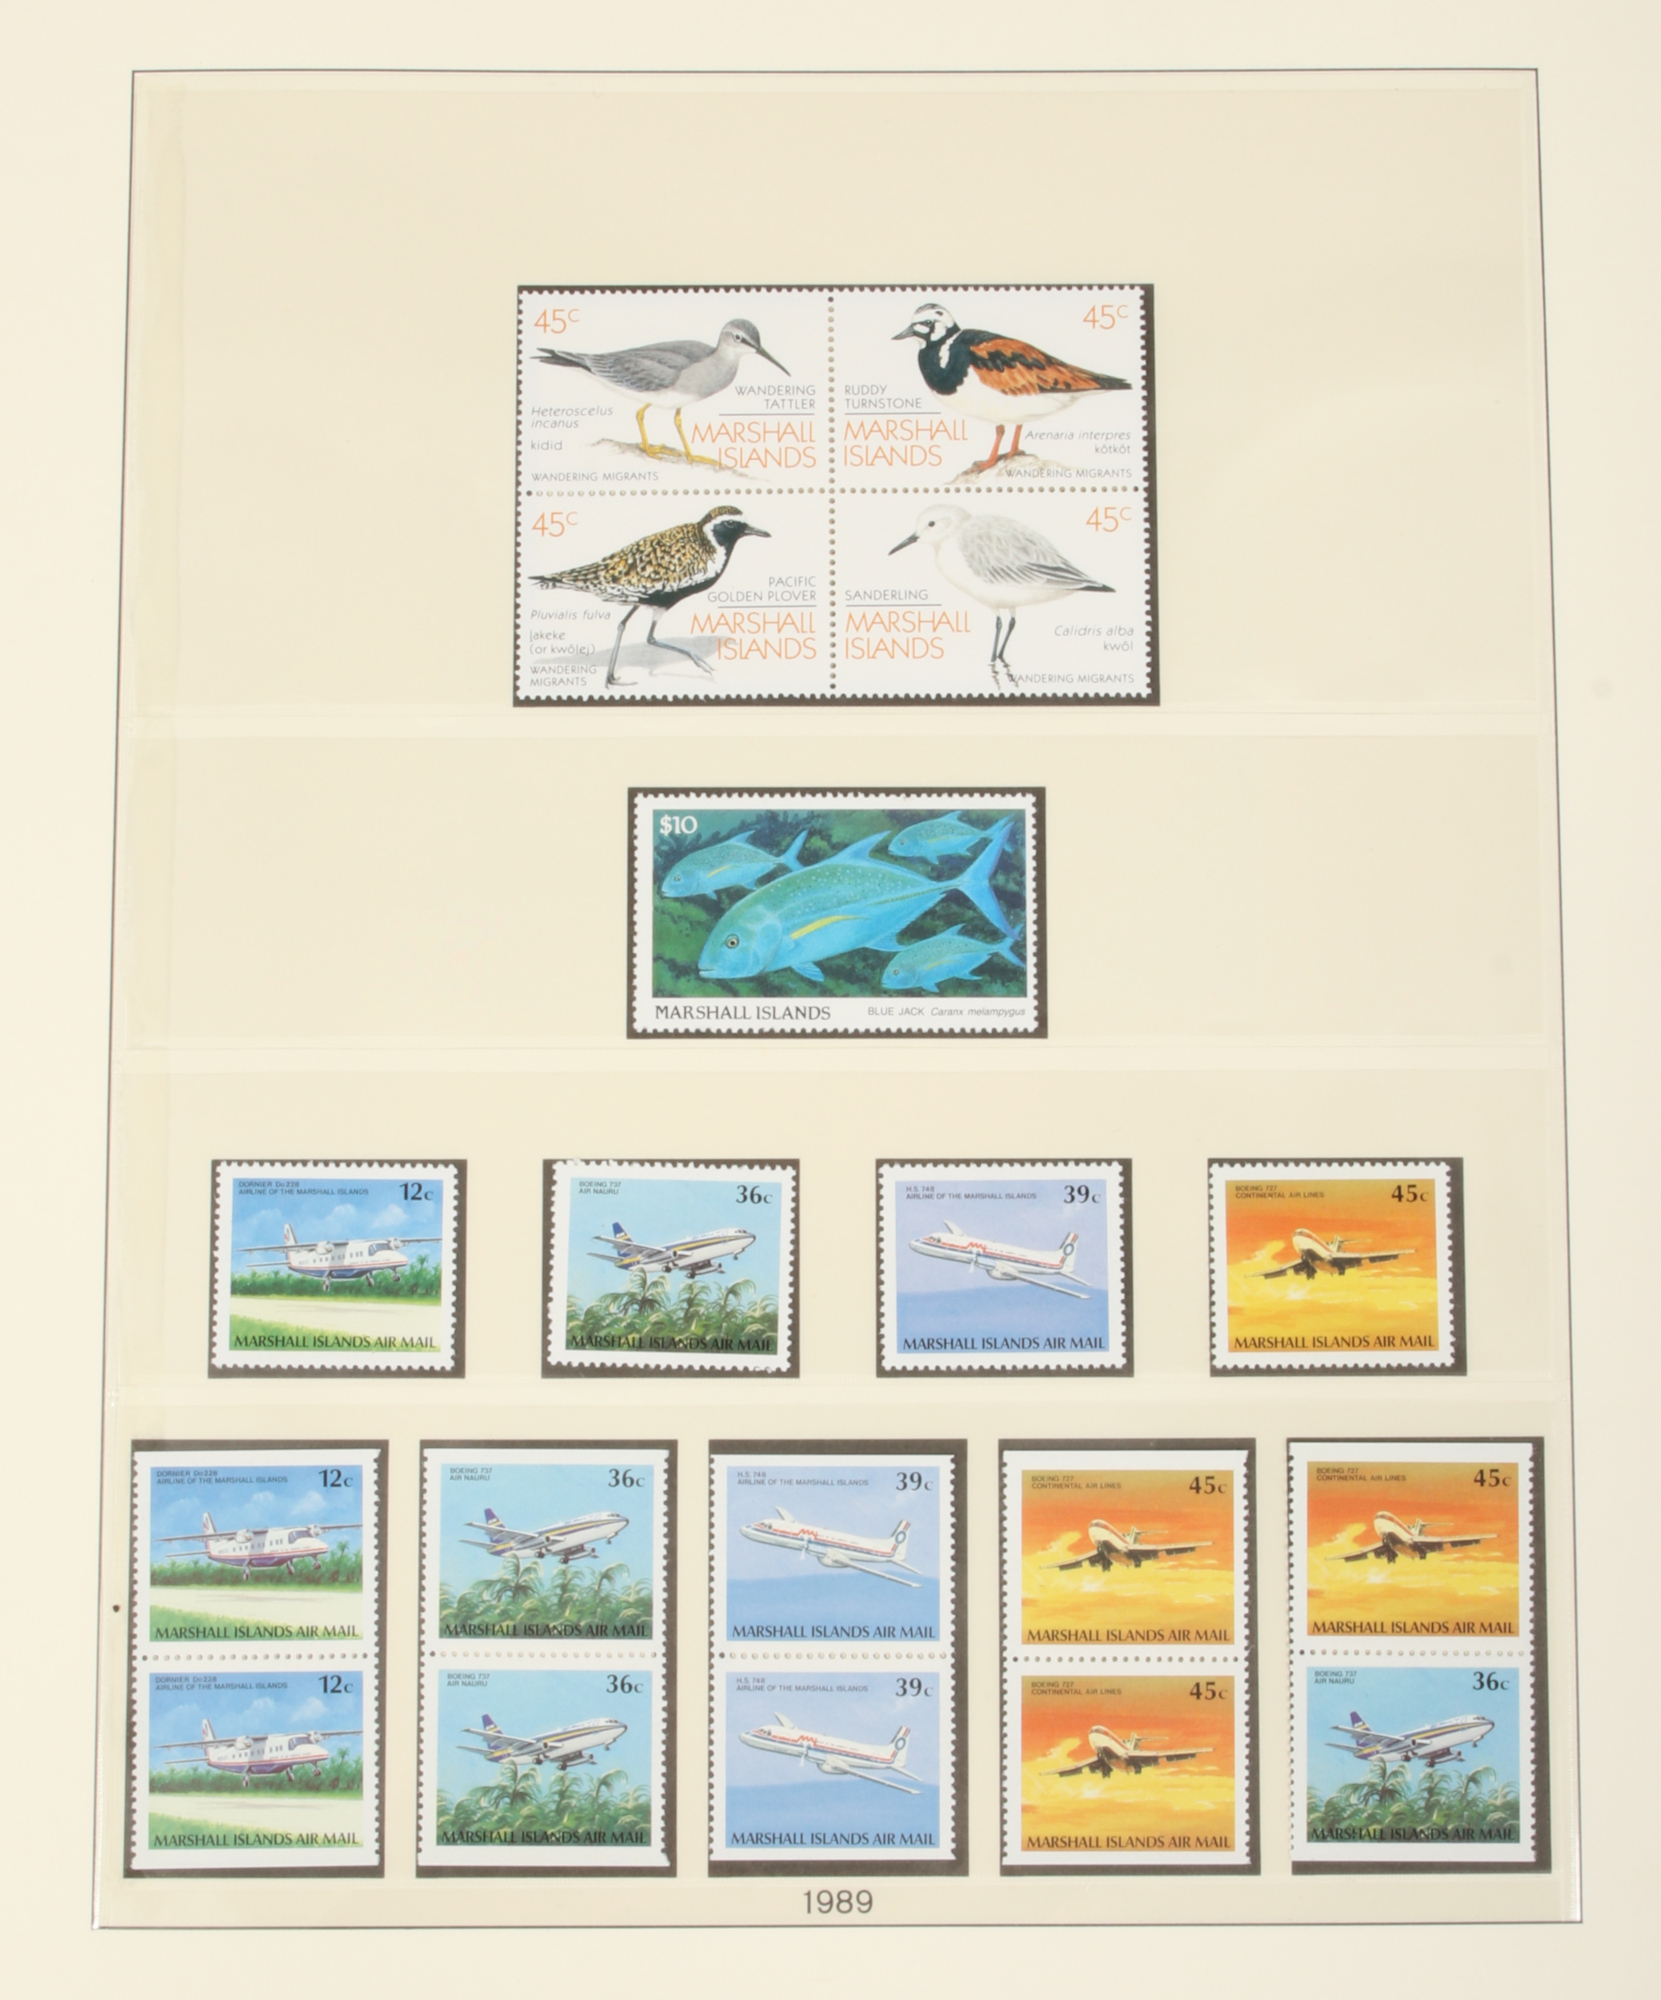 An album of Marshall island stamps.